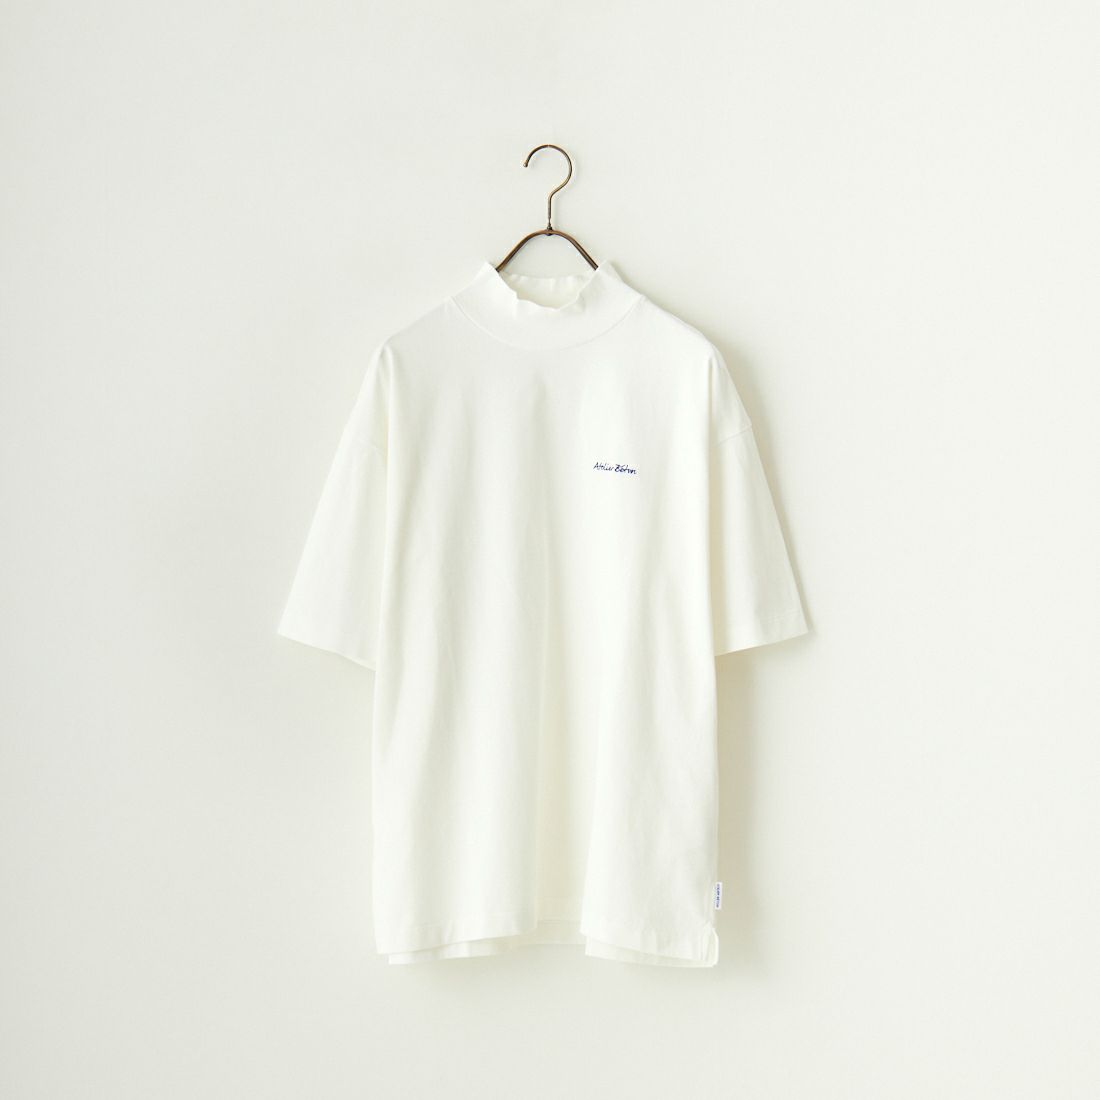 ATELIER BETON [アトリエベトン] ドライクロス モックネックTシャツ [241-31M] WHITE